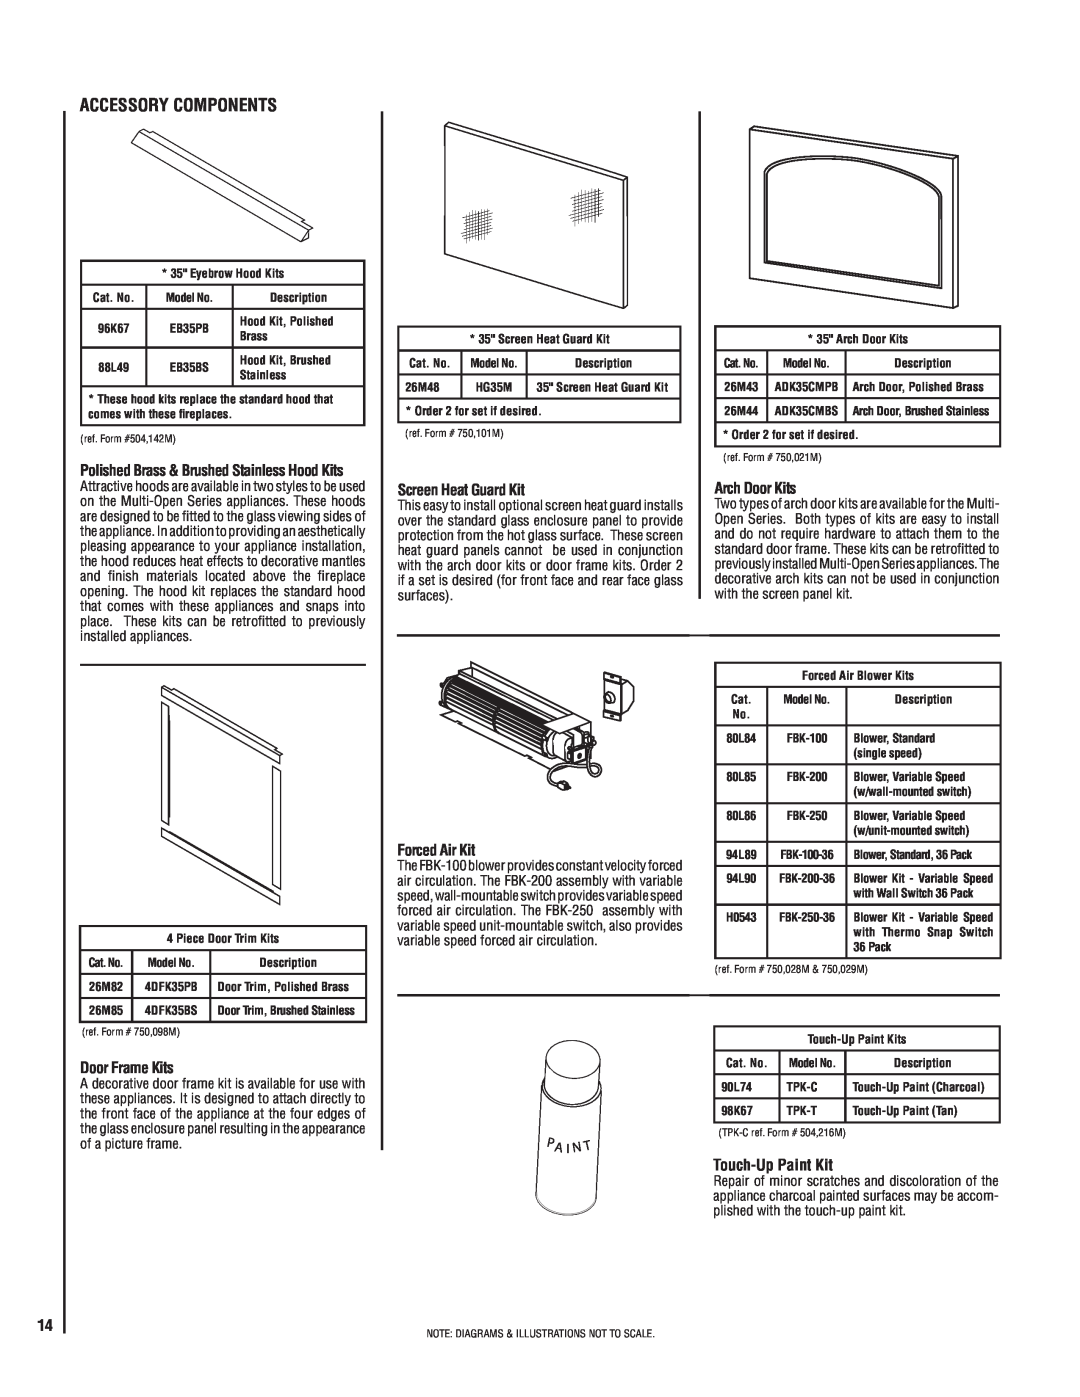 Lennox Hearth MPD35ST-NE manual Screen Heat Guard Kit, Arch Door Kits, Forced Air Kit, Door Frame Kits, Touch-UpPaint Kit 